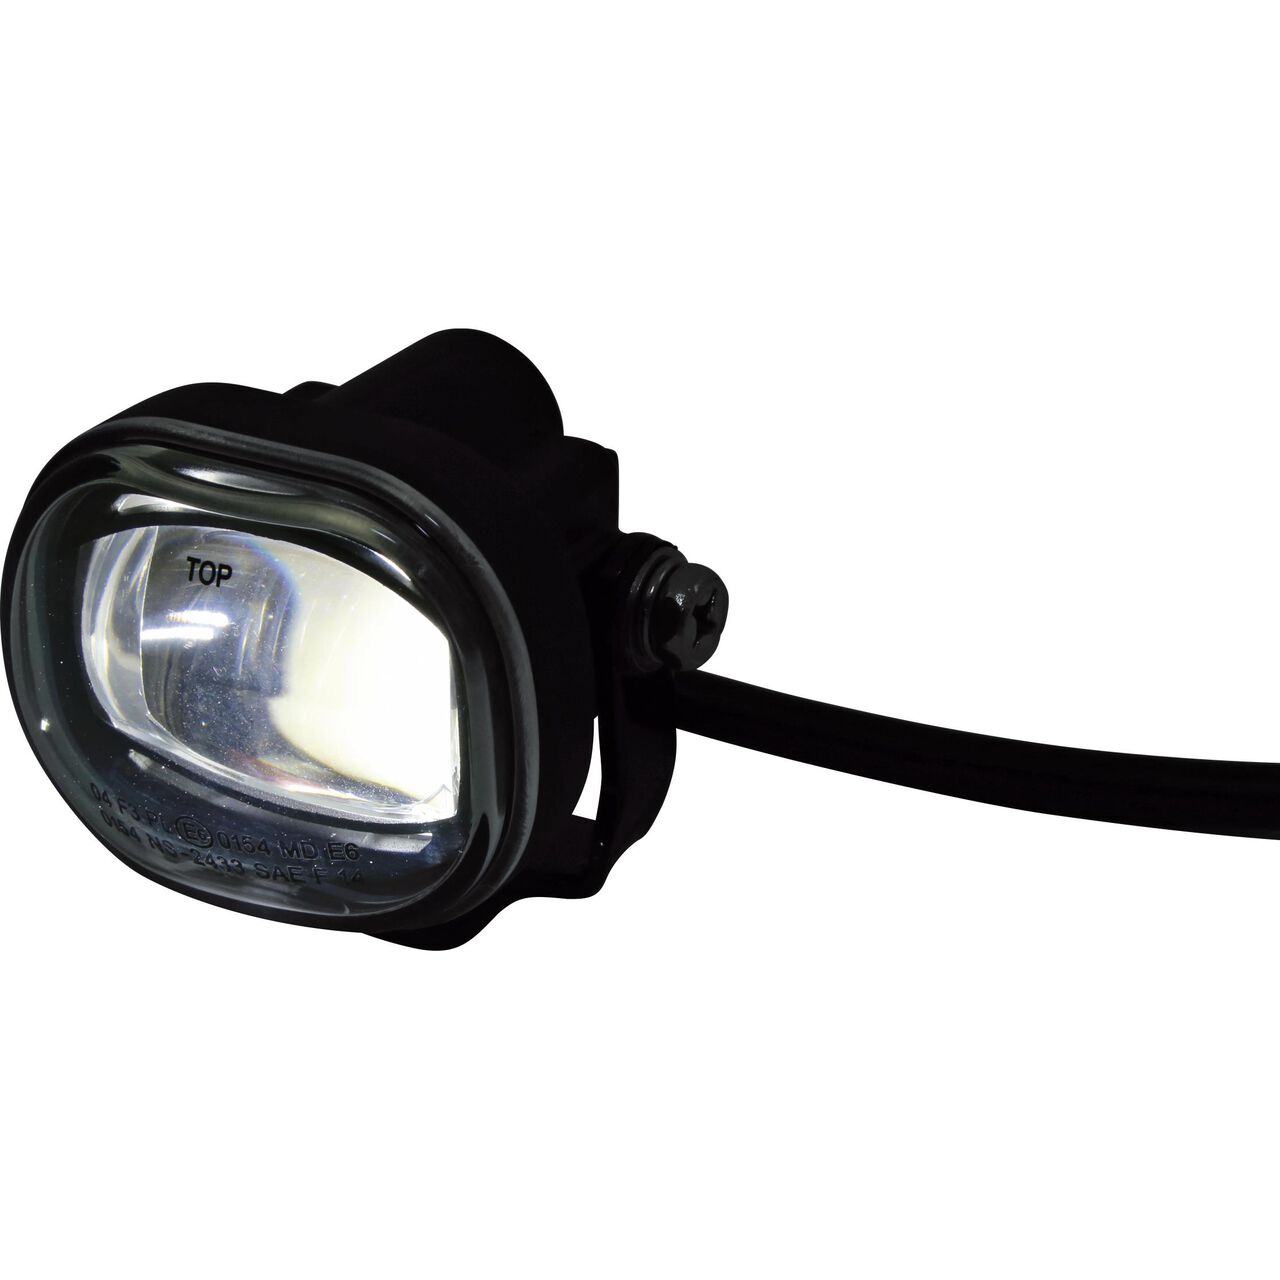 VN-Teile.de - Micro-Nebelscheinwerfer, rechteckig, H3 55W, E-geprüft,  schwarz, klar